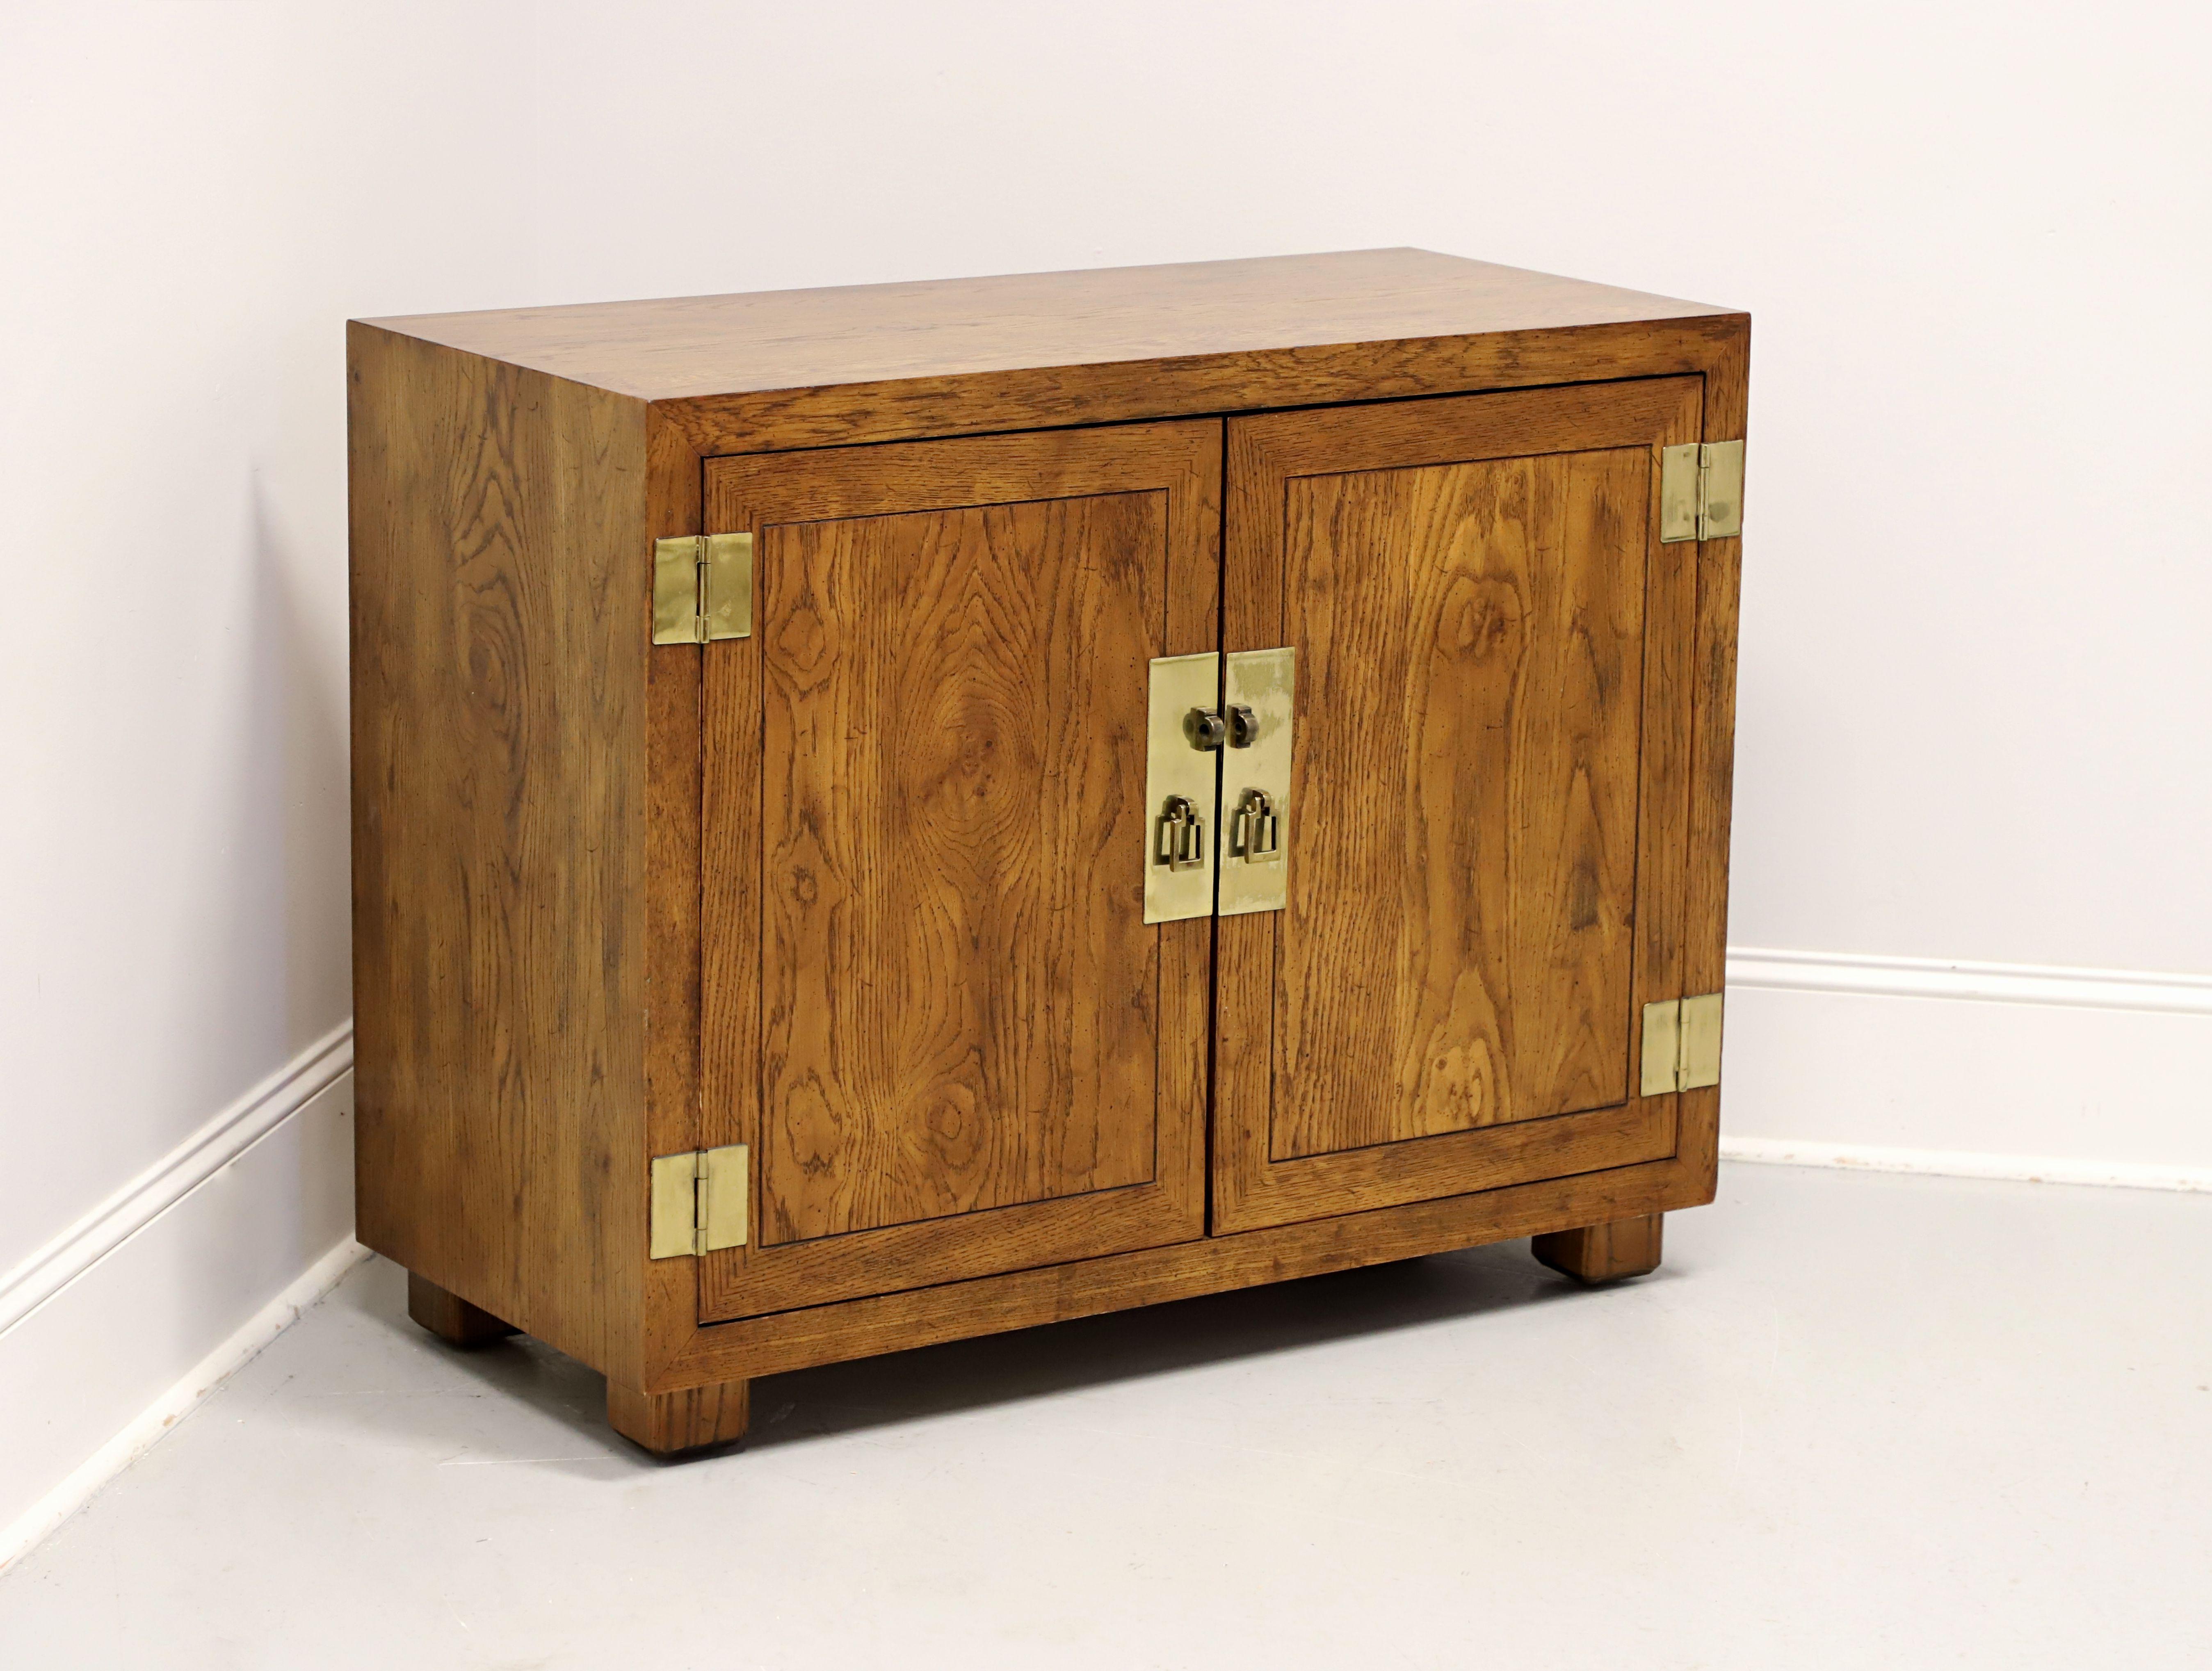 HENREDON Artefacts Knotty Oak Campaign Style Console Cabinet - B 5